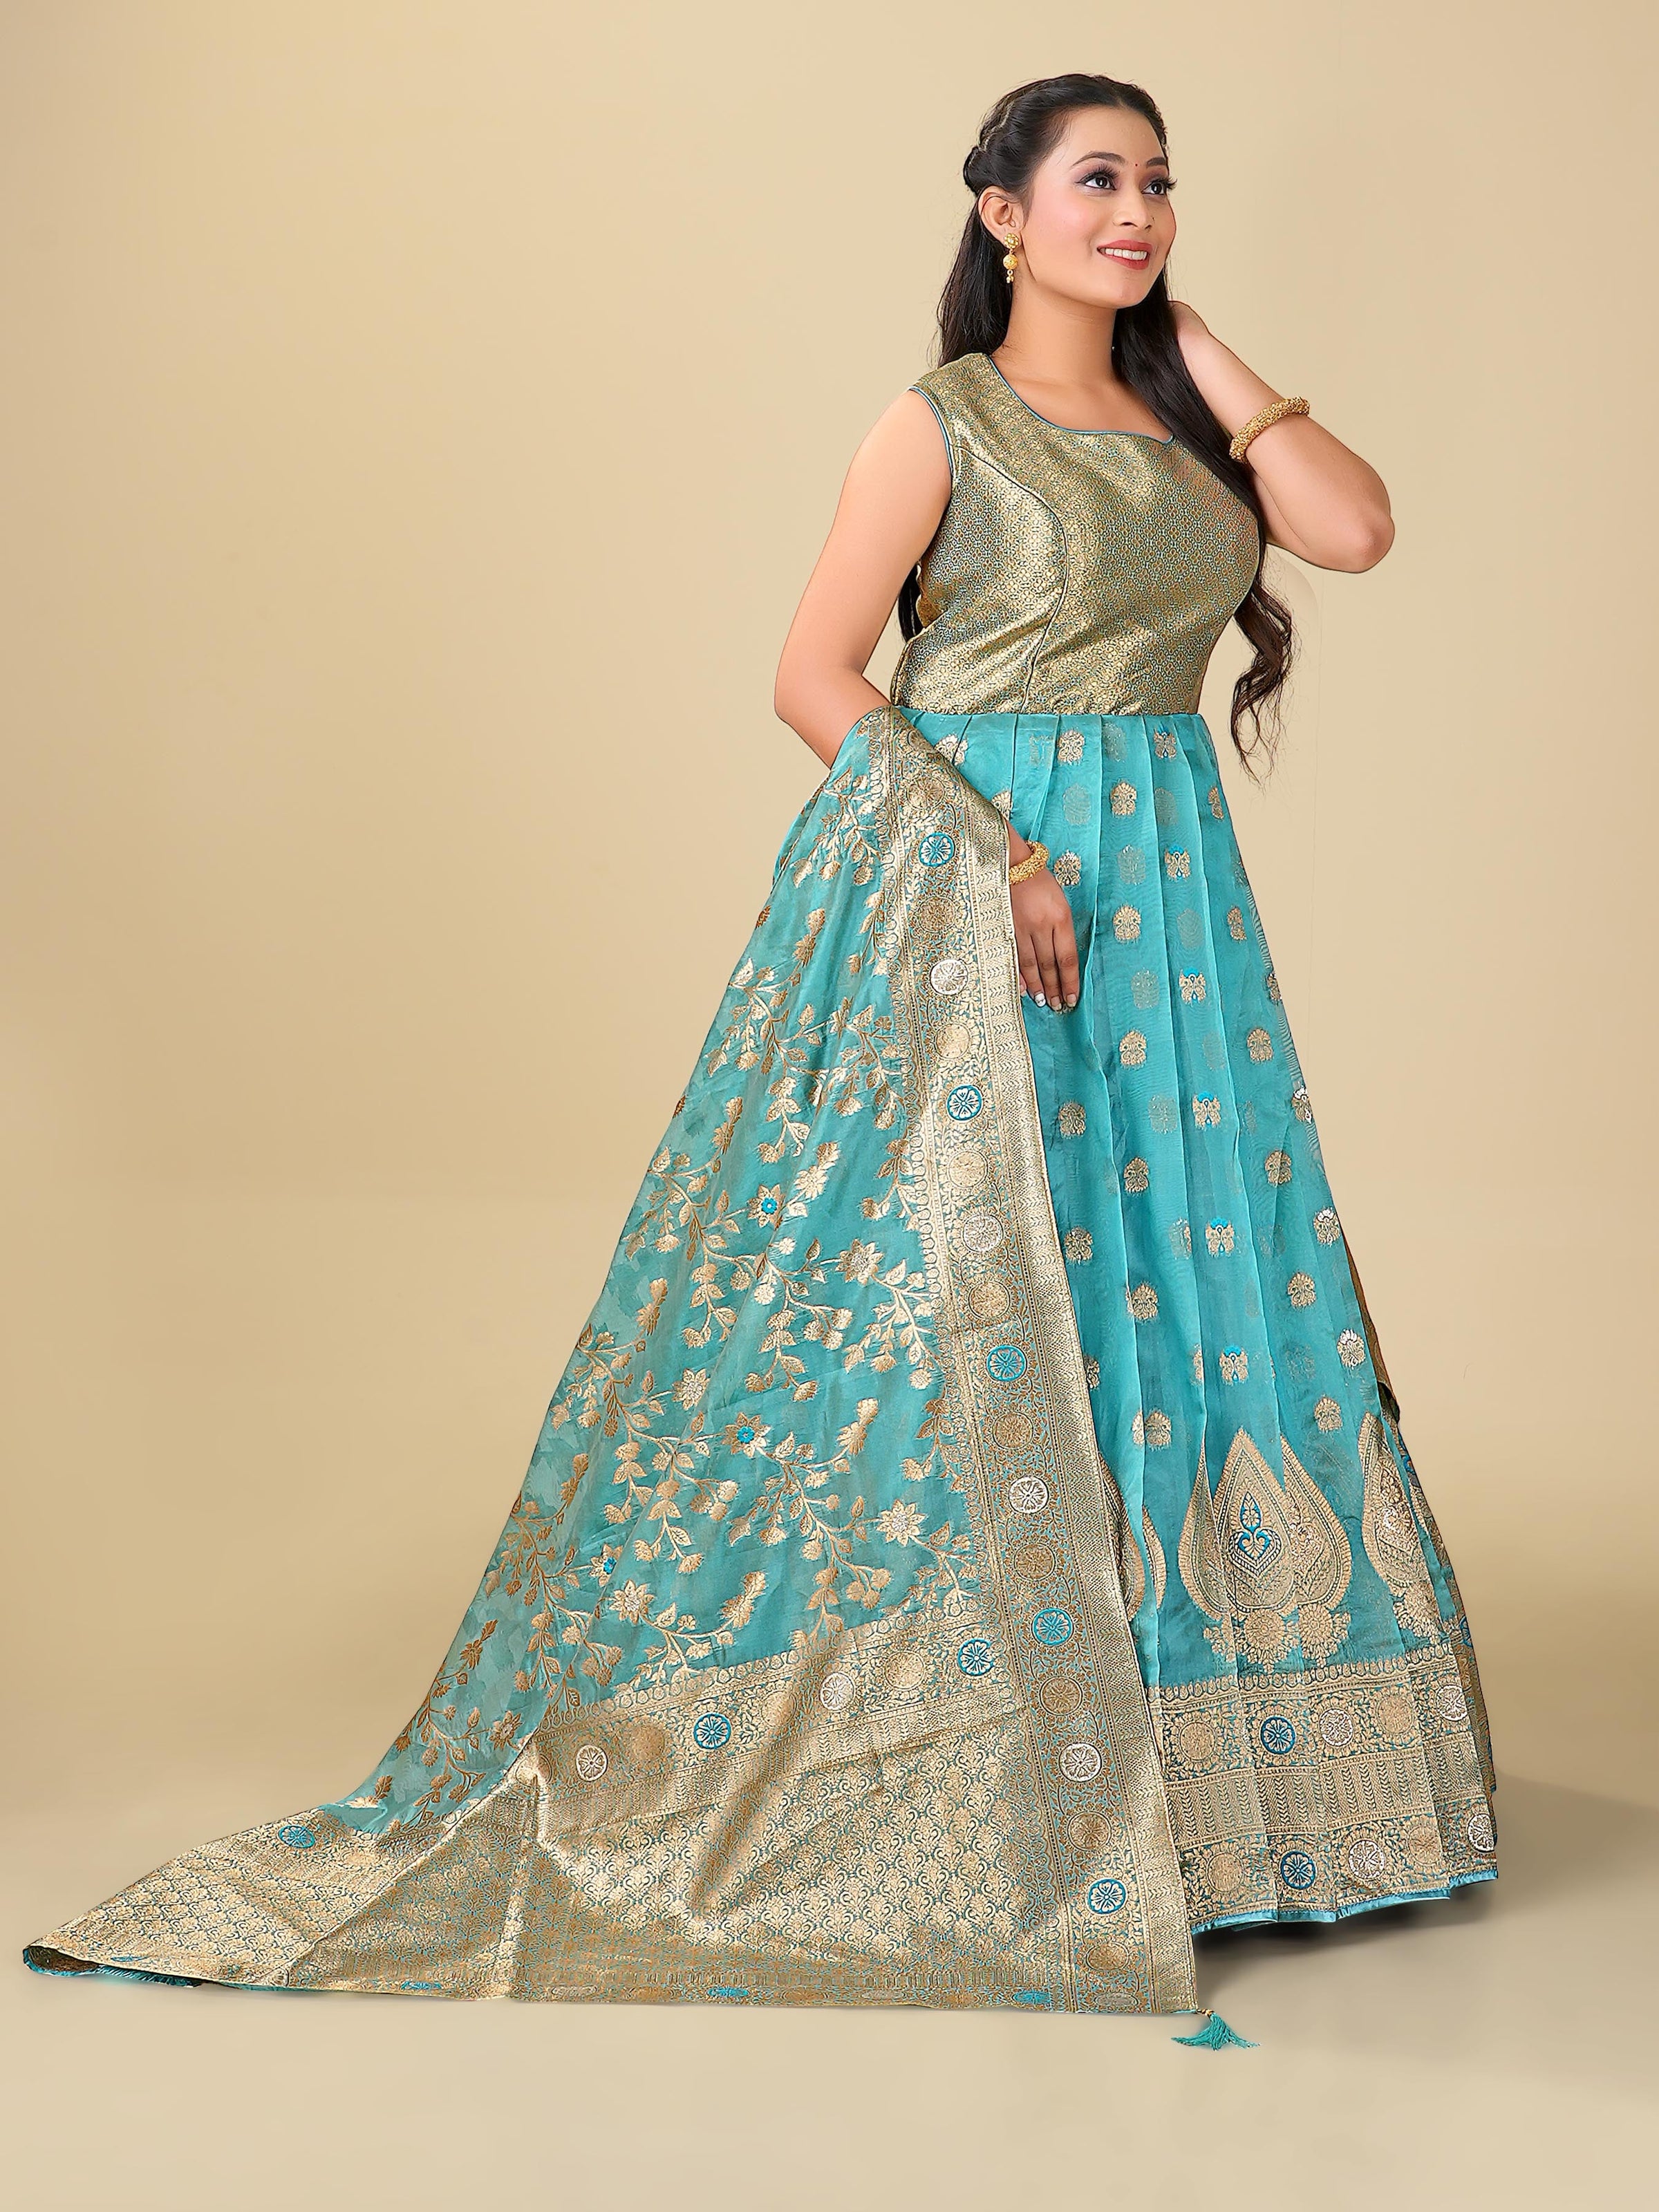 Gown by half saree studio